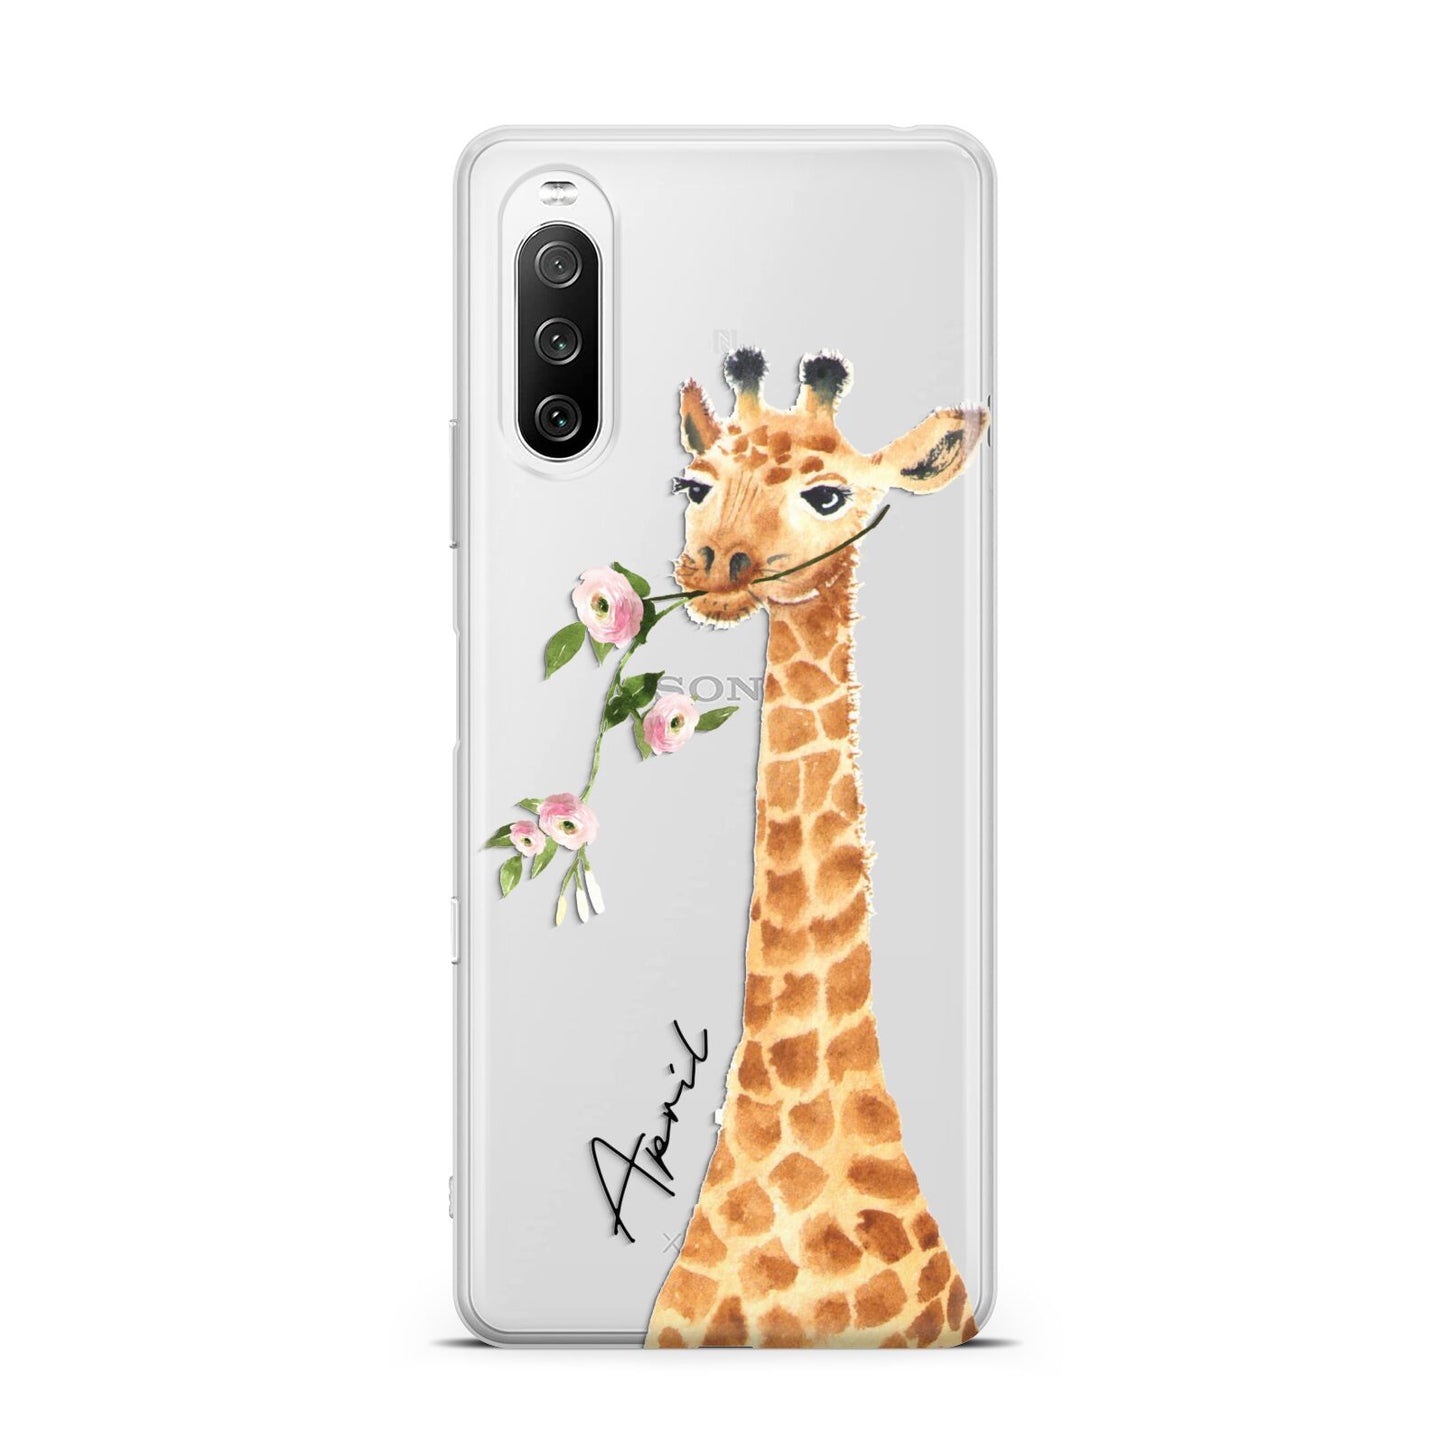 Personalised Giraffe with Name Sony Xperia 10 III Case